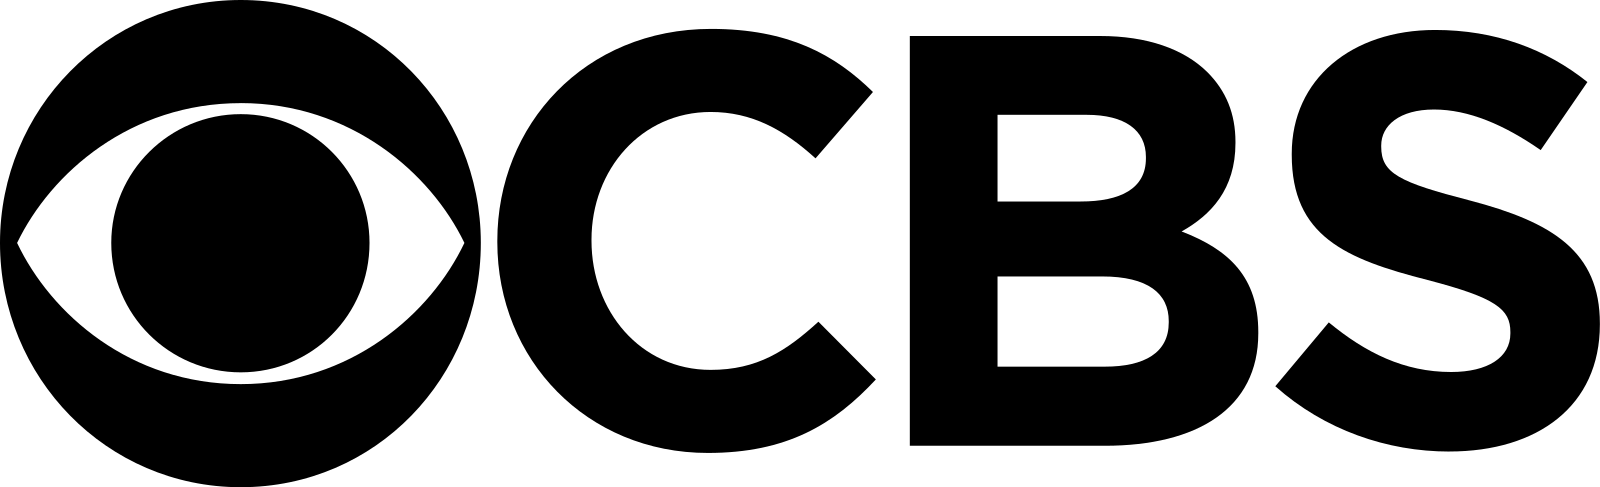 1600px-CBS_logo.svg.png